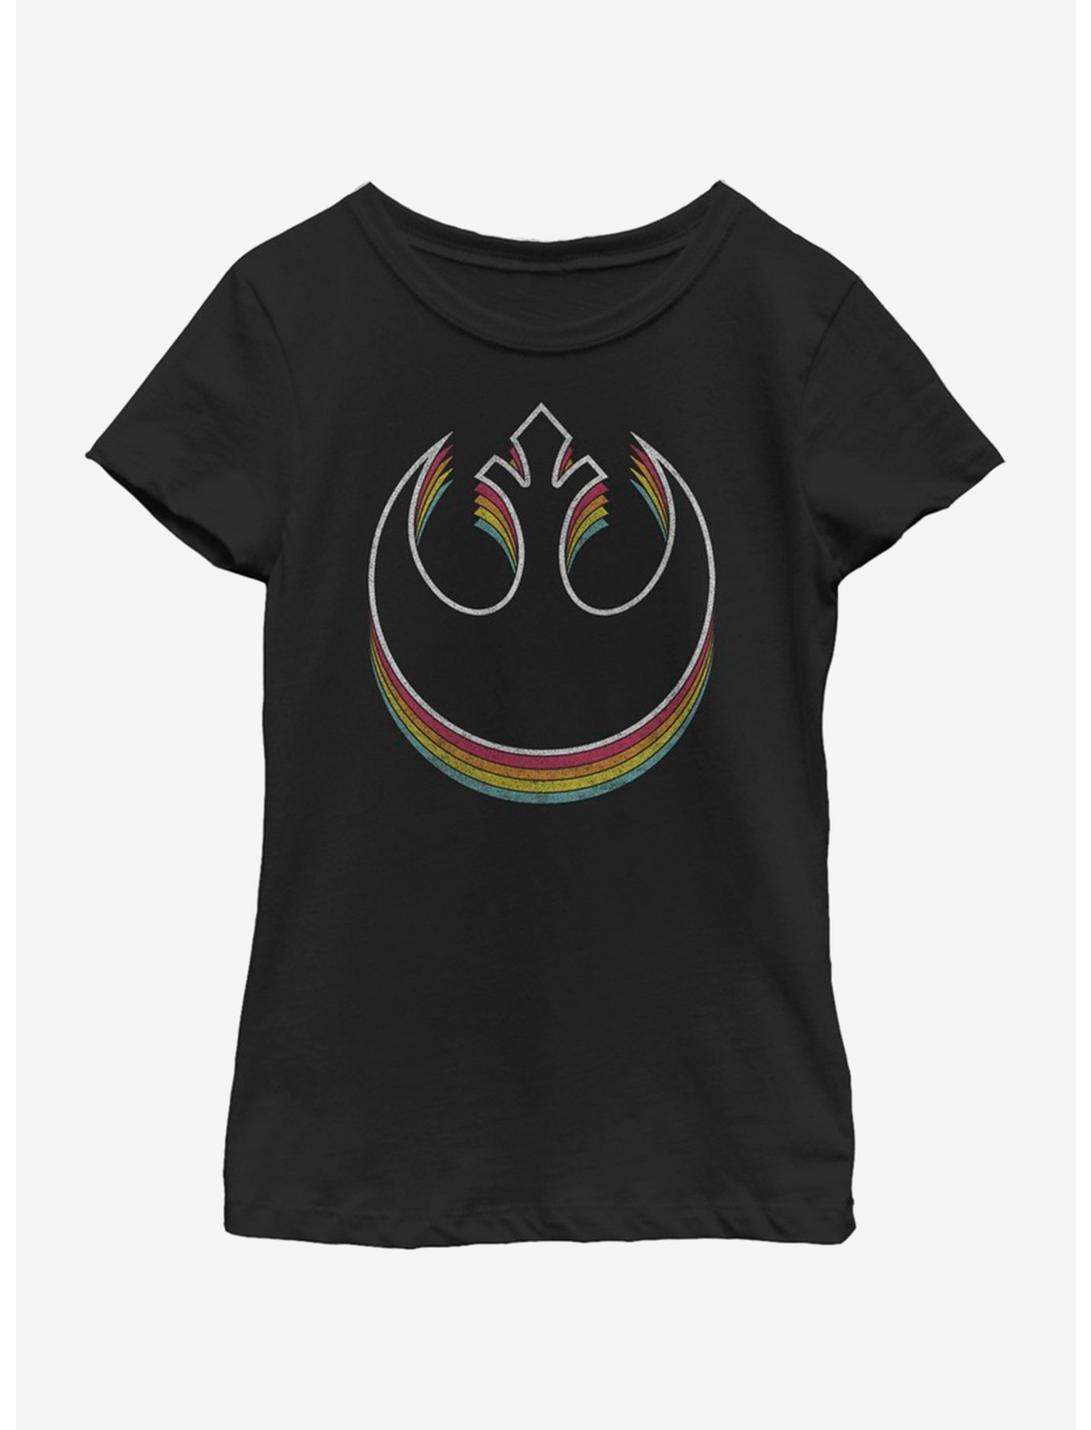 Star Wars Rainbow Rebel Youth Girls T-Shirt, BLACK, hi-res